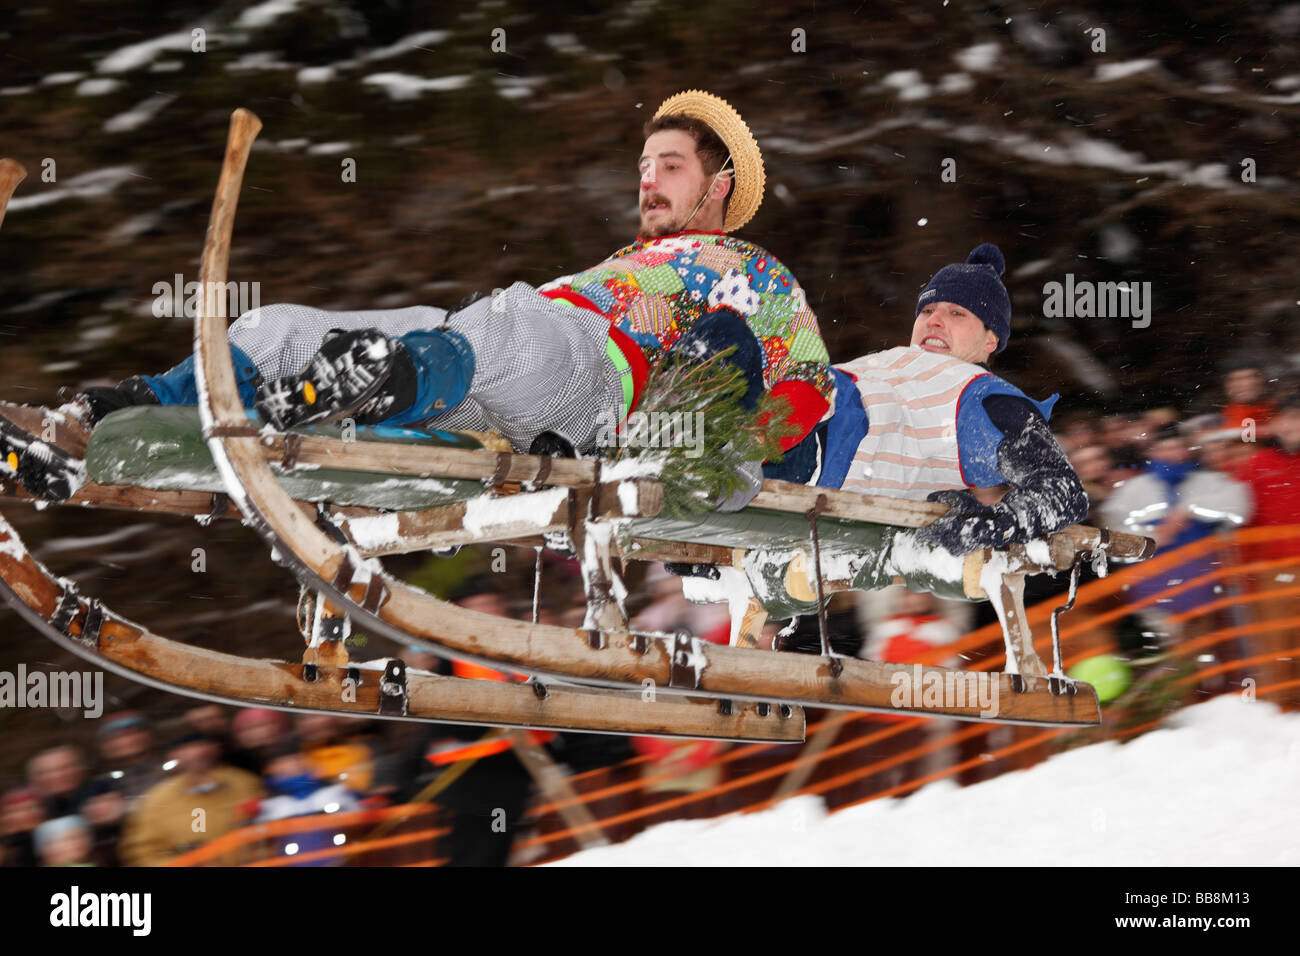 Gaissach schnabler and sled race, carnival custom, Gaissach, Isarwinkel, Upper Bavaria, Bavaria, Germany, Europe Stock Photo